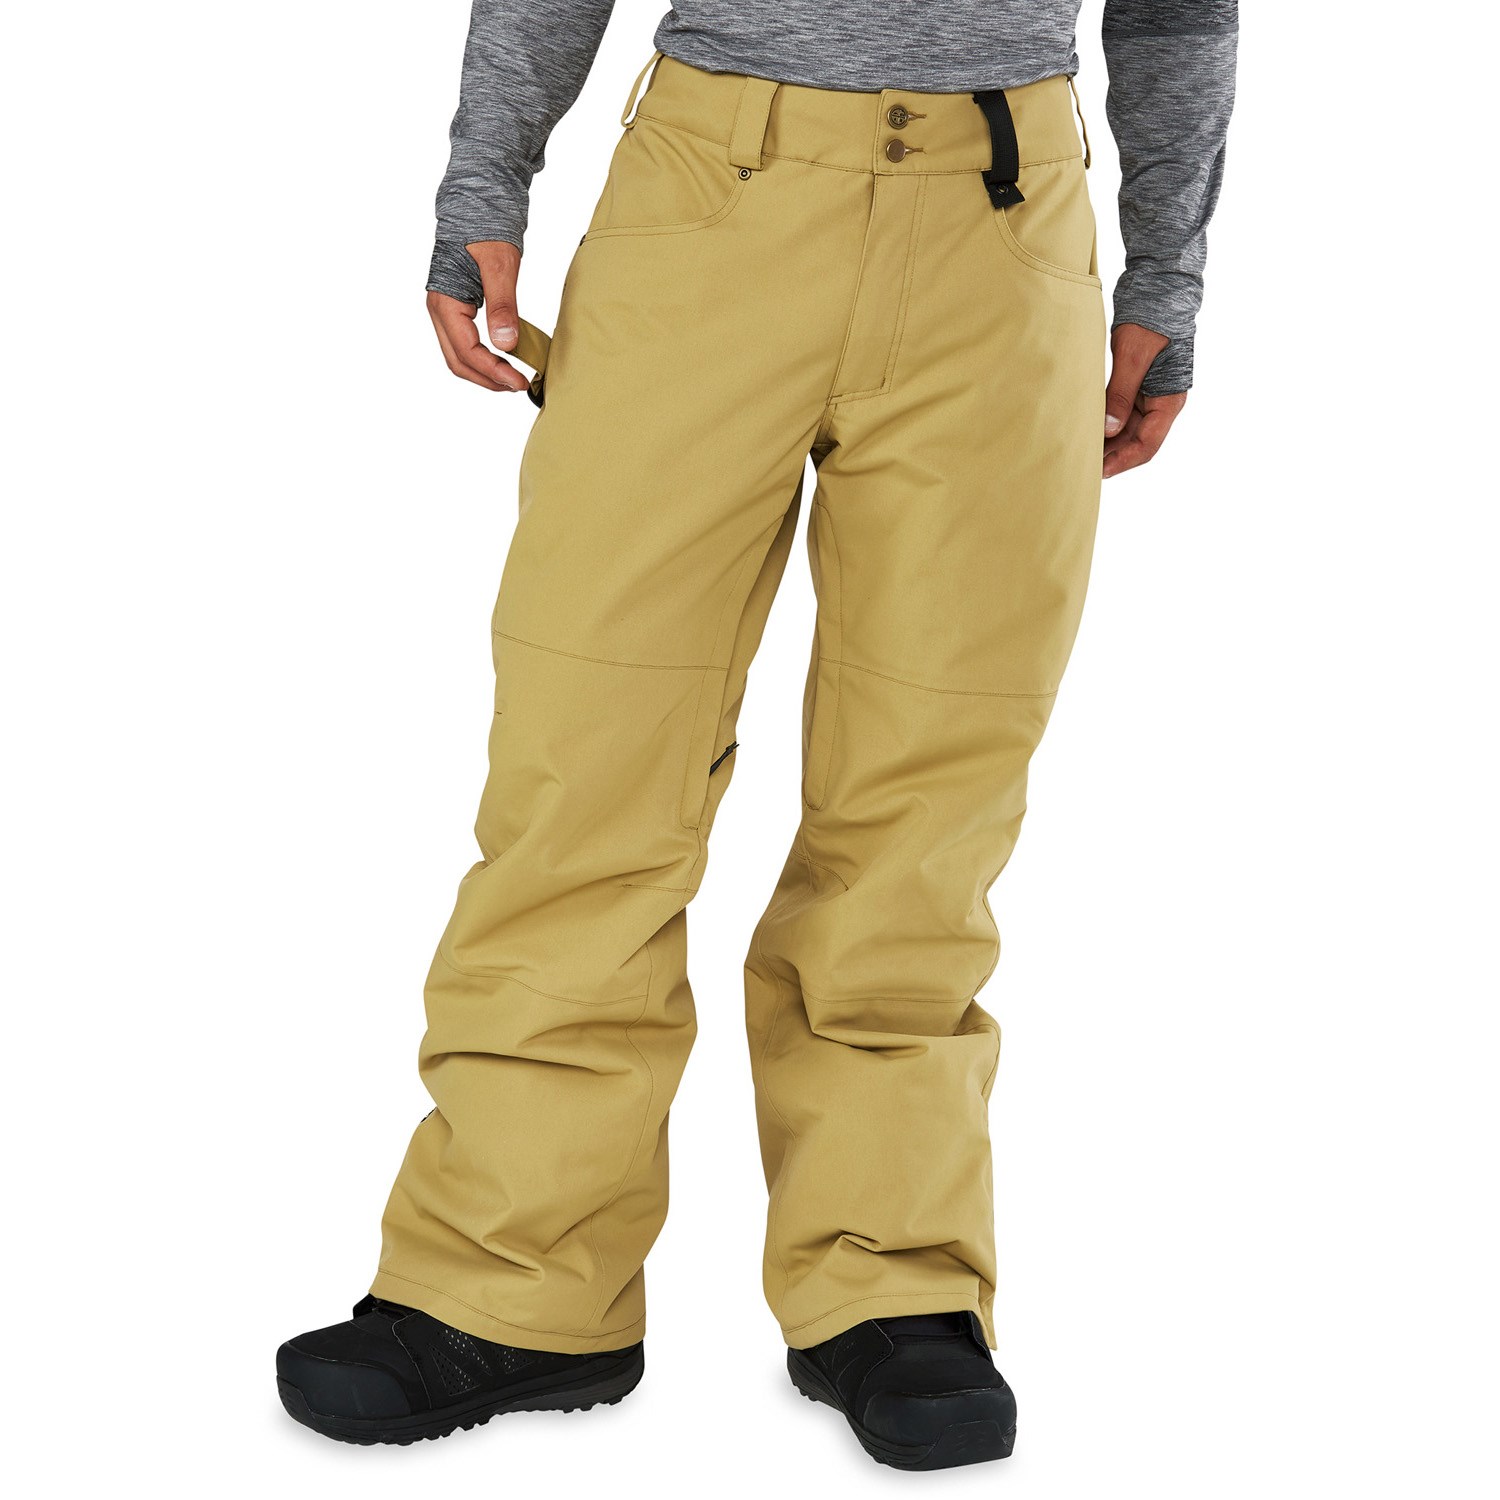 Dakine Snowboard Pants Size Chart